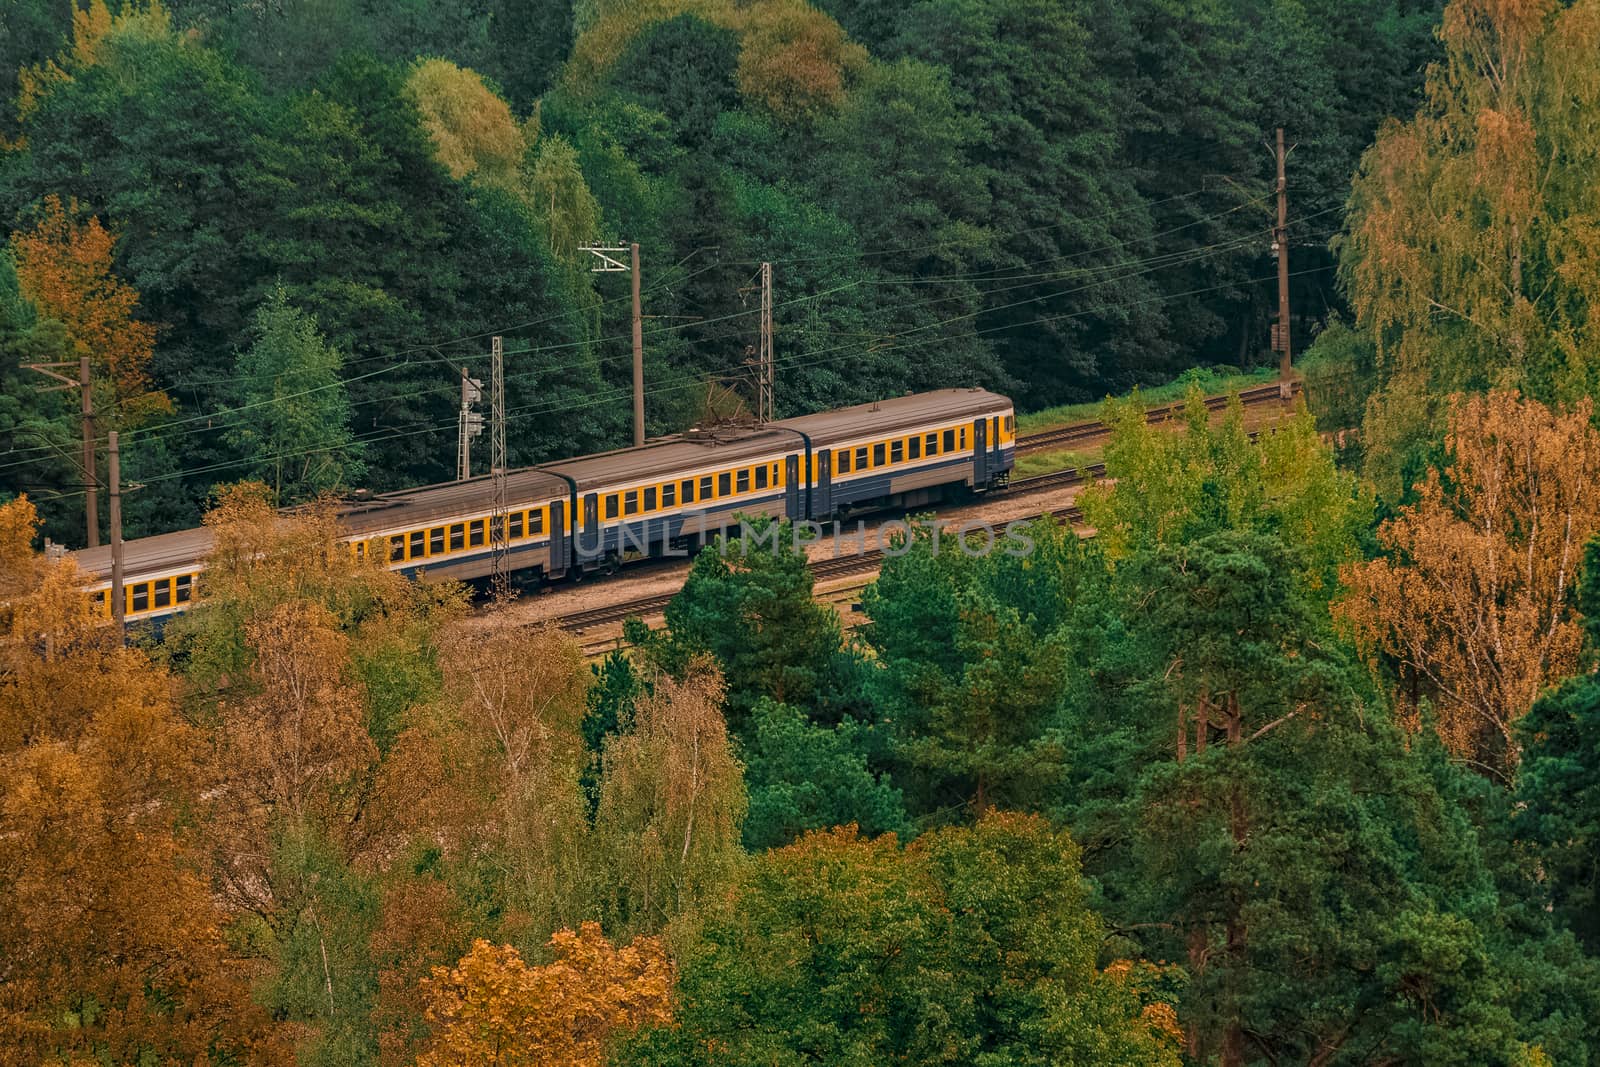 Passenger electric train by sengnsp